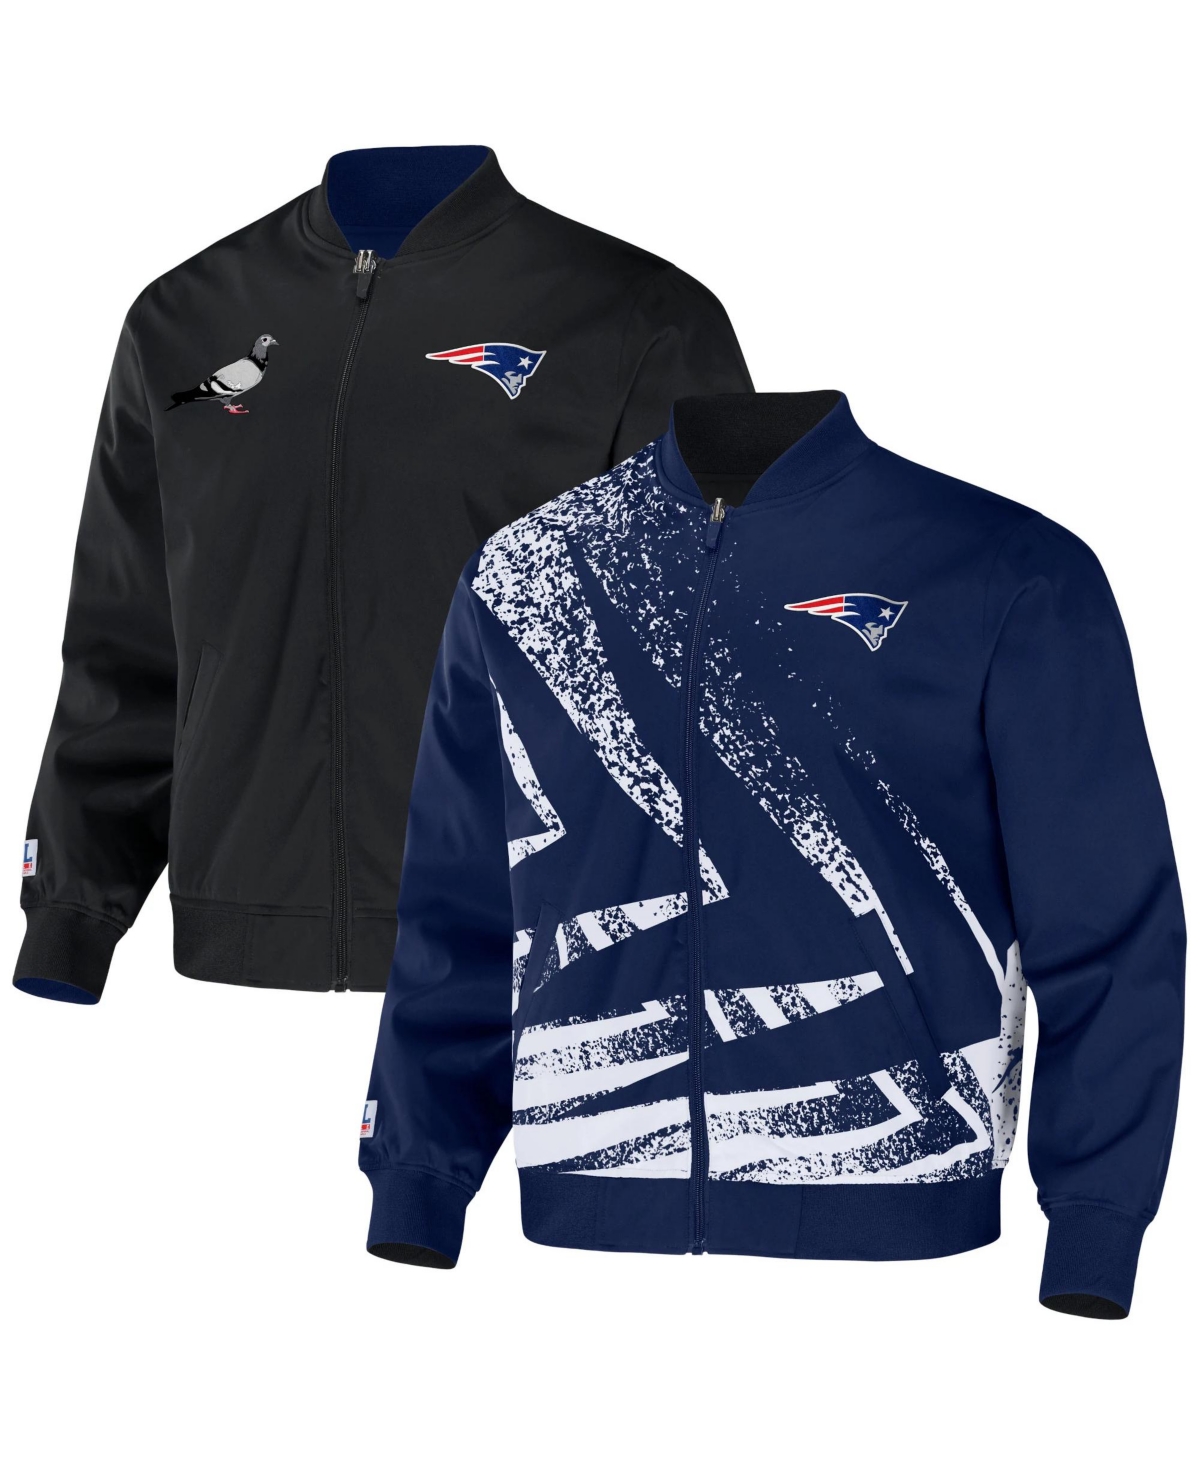 Men's Nfl X Staple Navy New England Patriots Embroidered Reversable Nylon Jacket - Navy